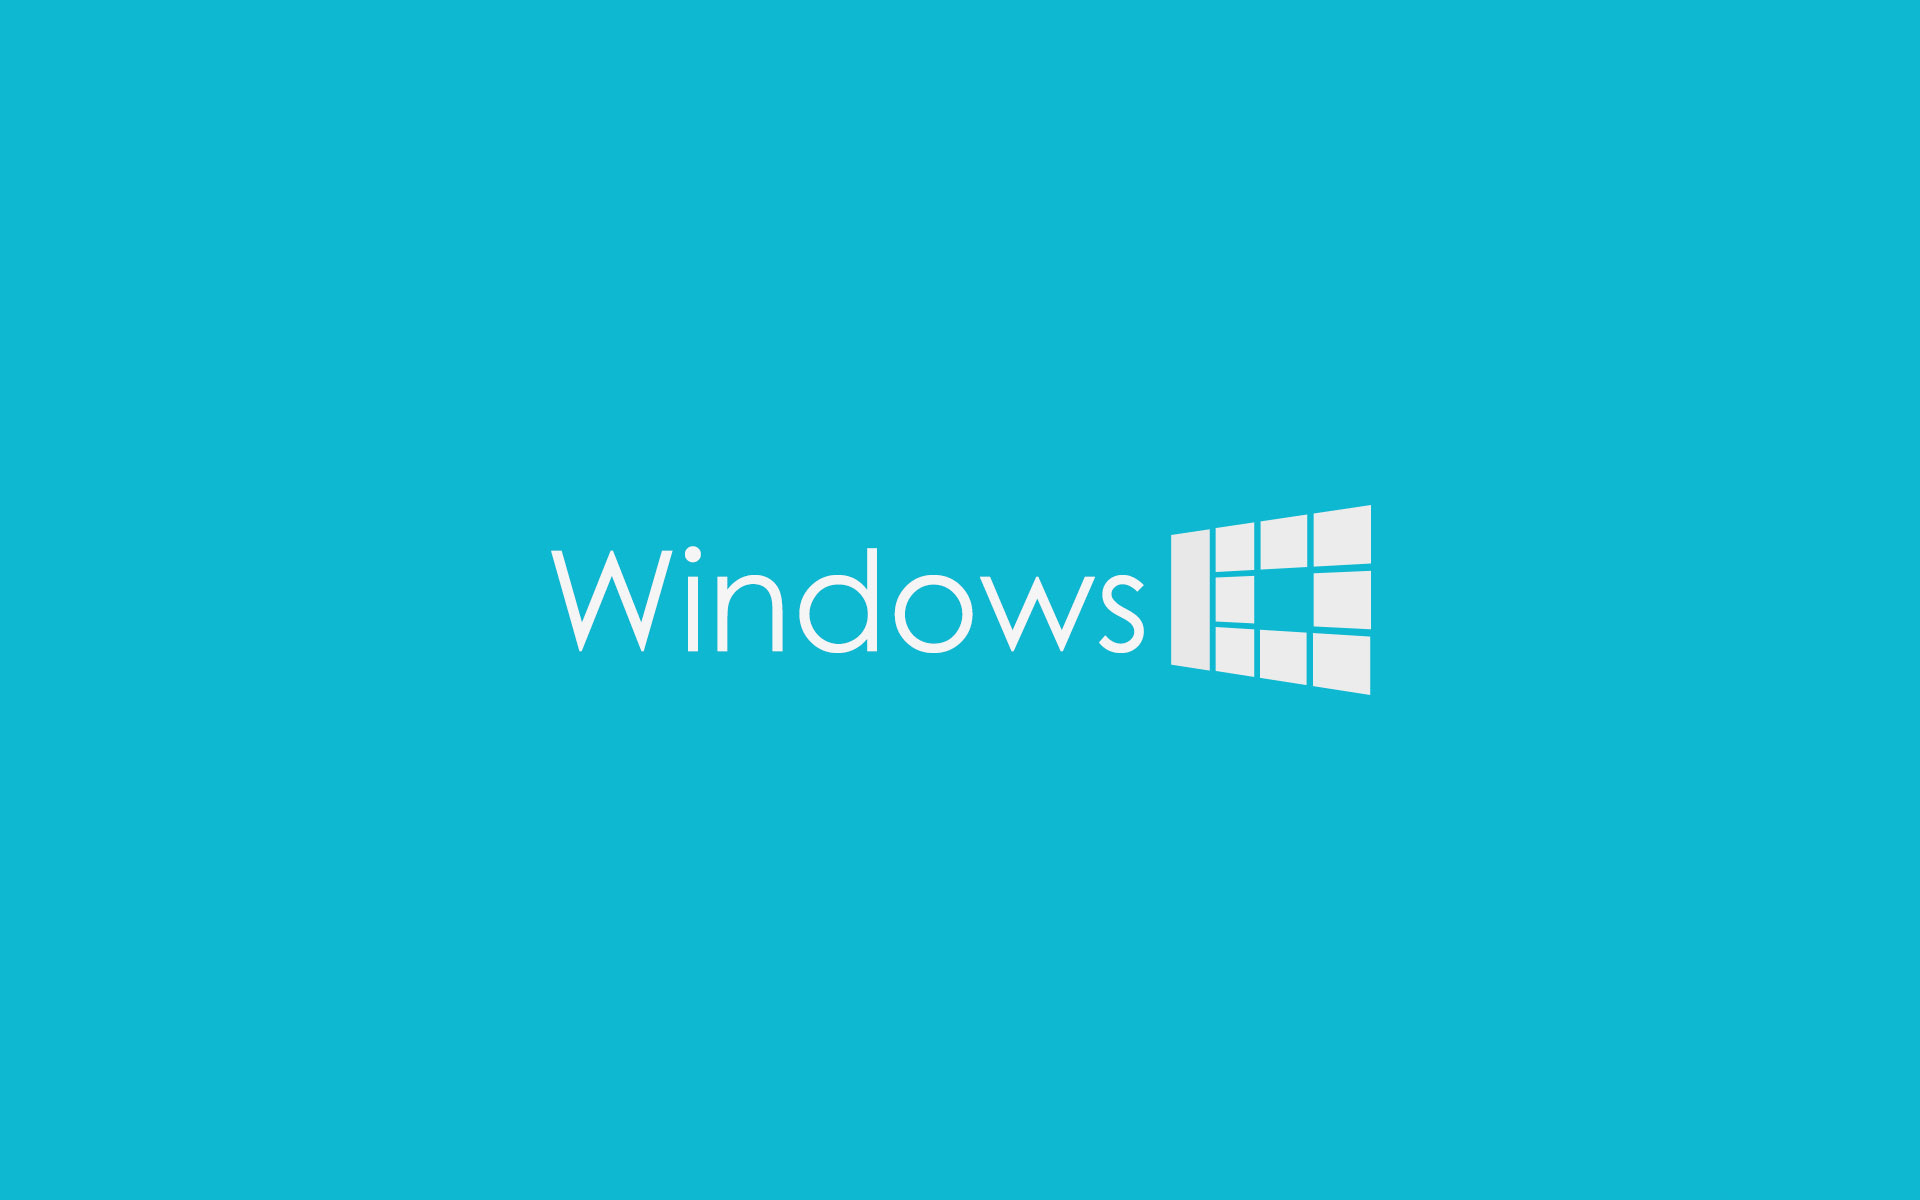 Free Windows 10 Wallpaper Microsoft Windows 10 Windows 10 Windows 10